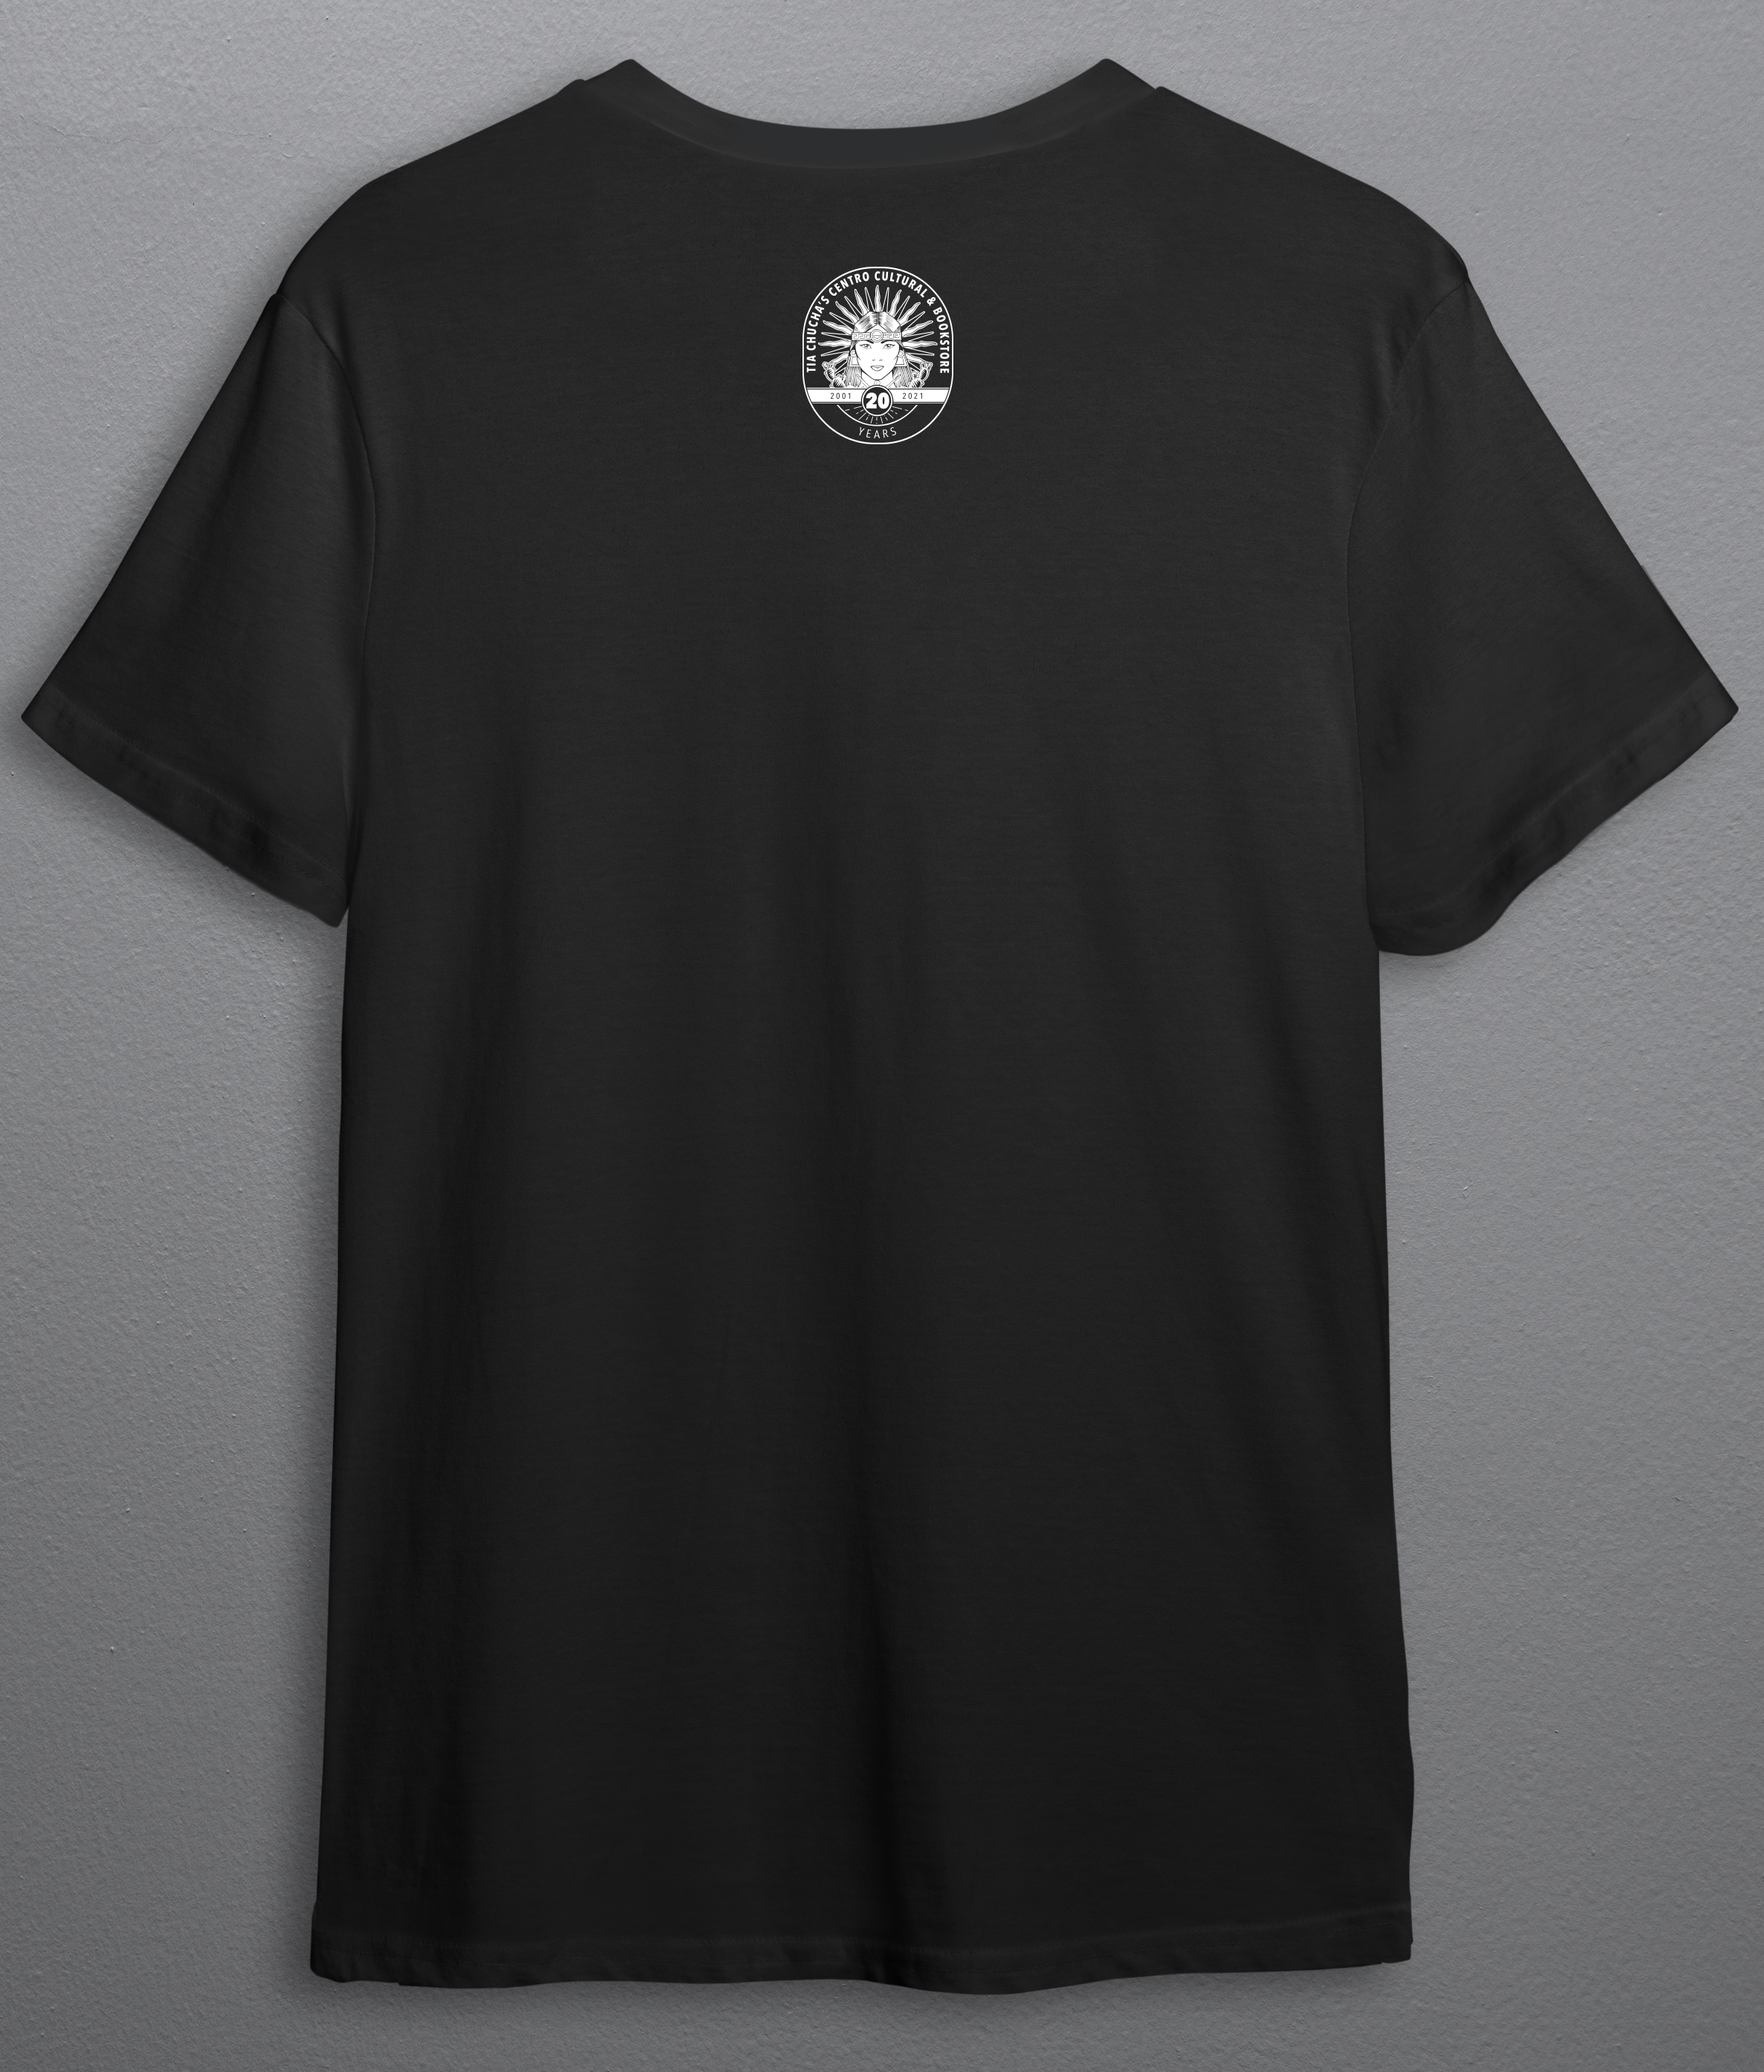 Miccailhuitontli & Hue Miccailhuitl Short Sleeve T-Shirt (2021)